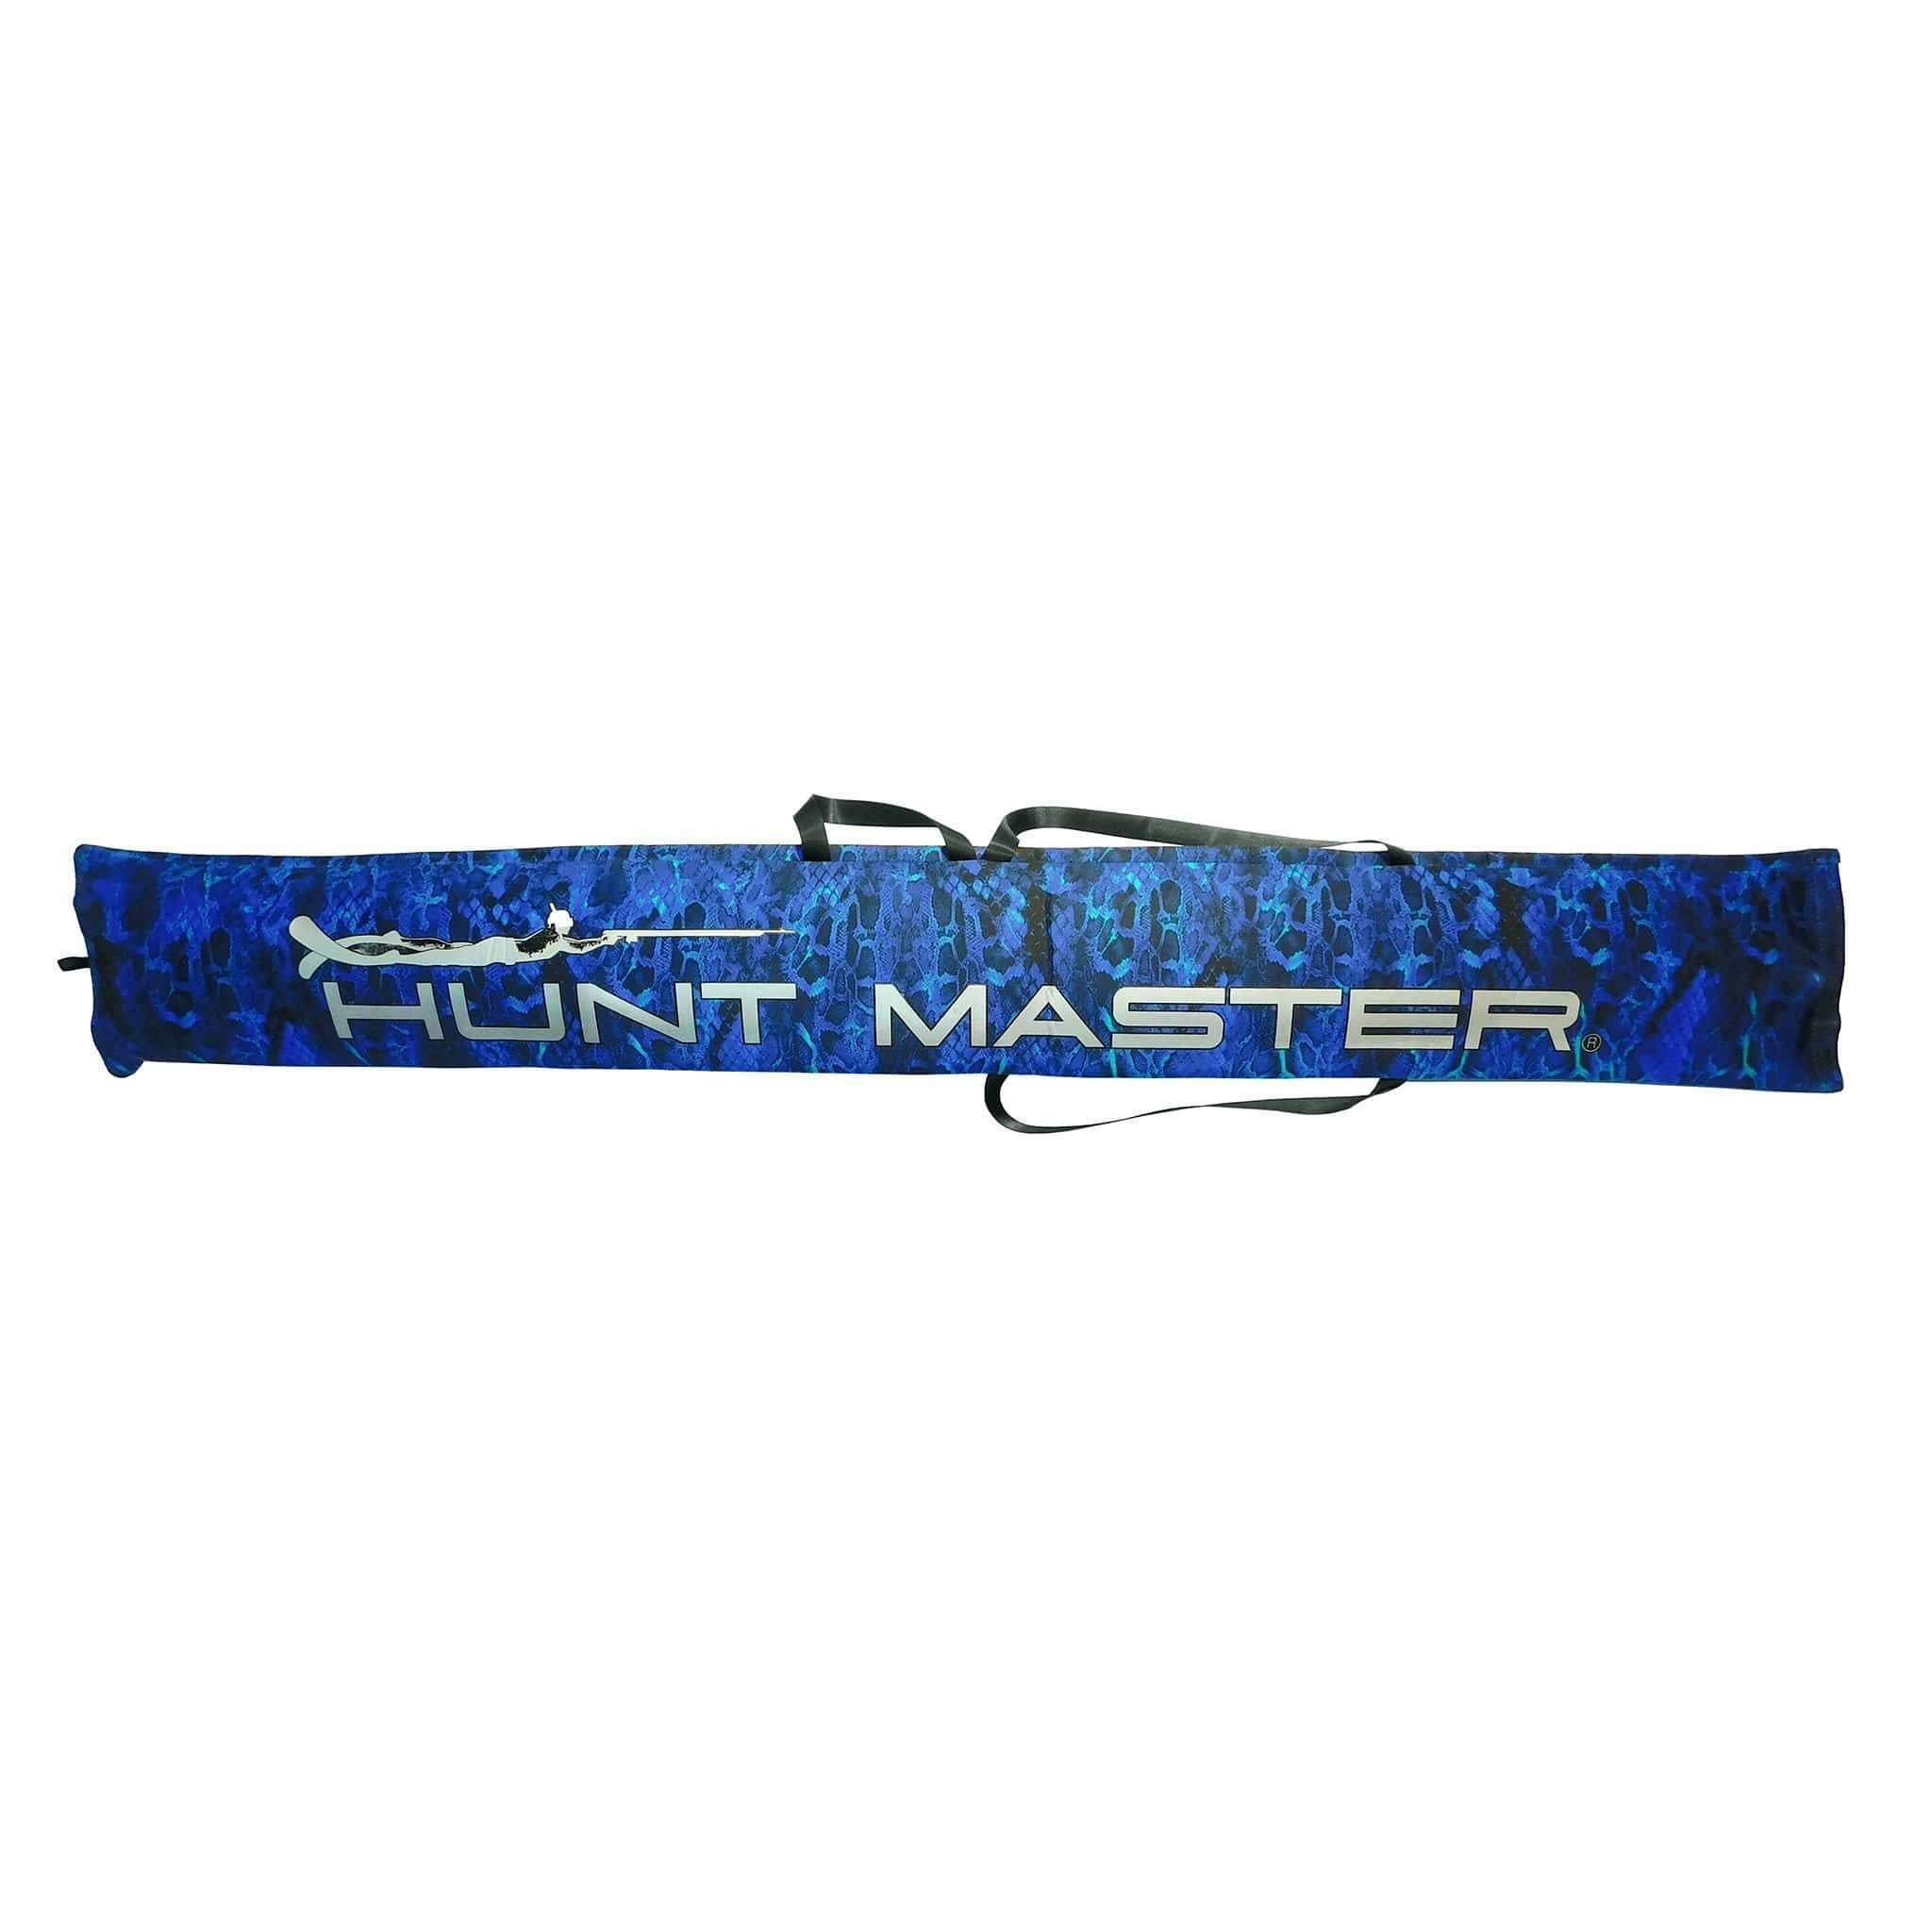 HuntMaster Blue Neoprene Gun Bag - Camo Series (Blue)